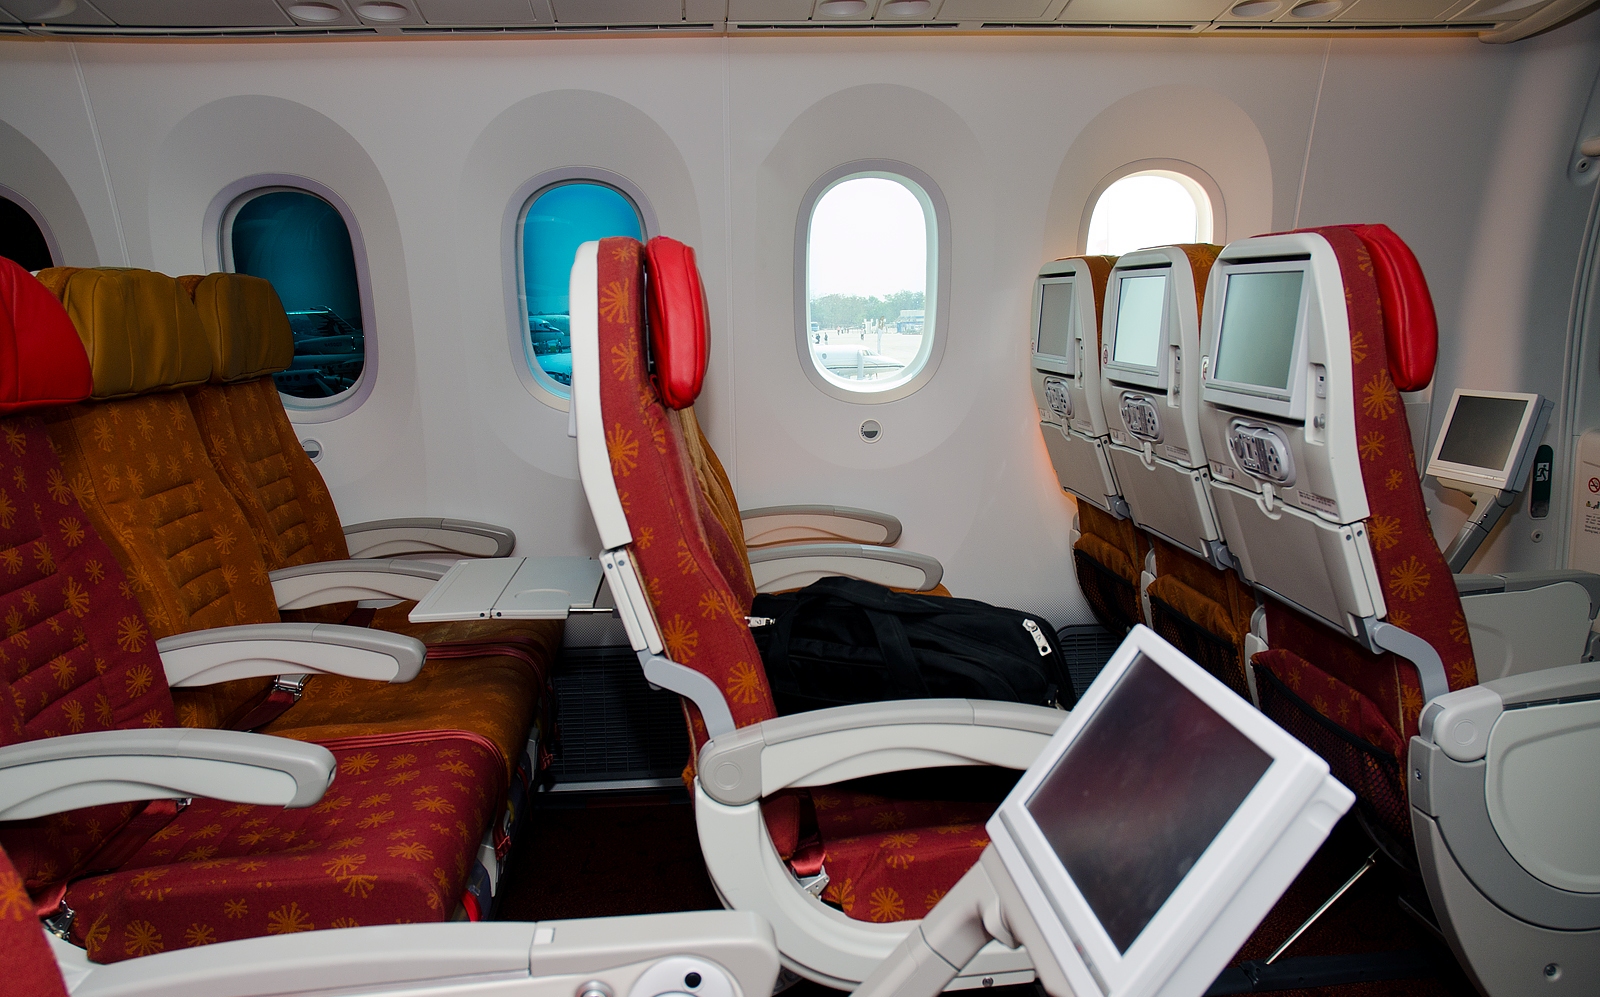 Boeing 787 8 Dreamliner Economy Class Cabin Interior Of Air